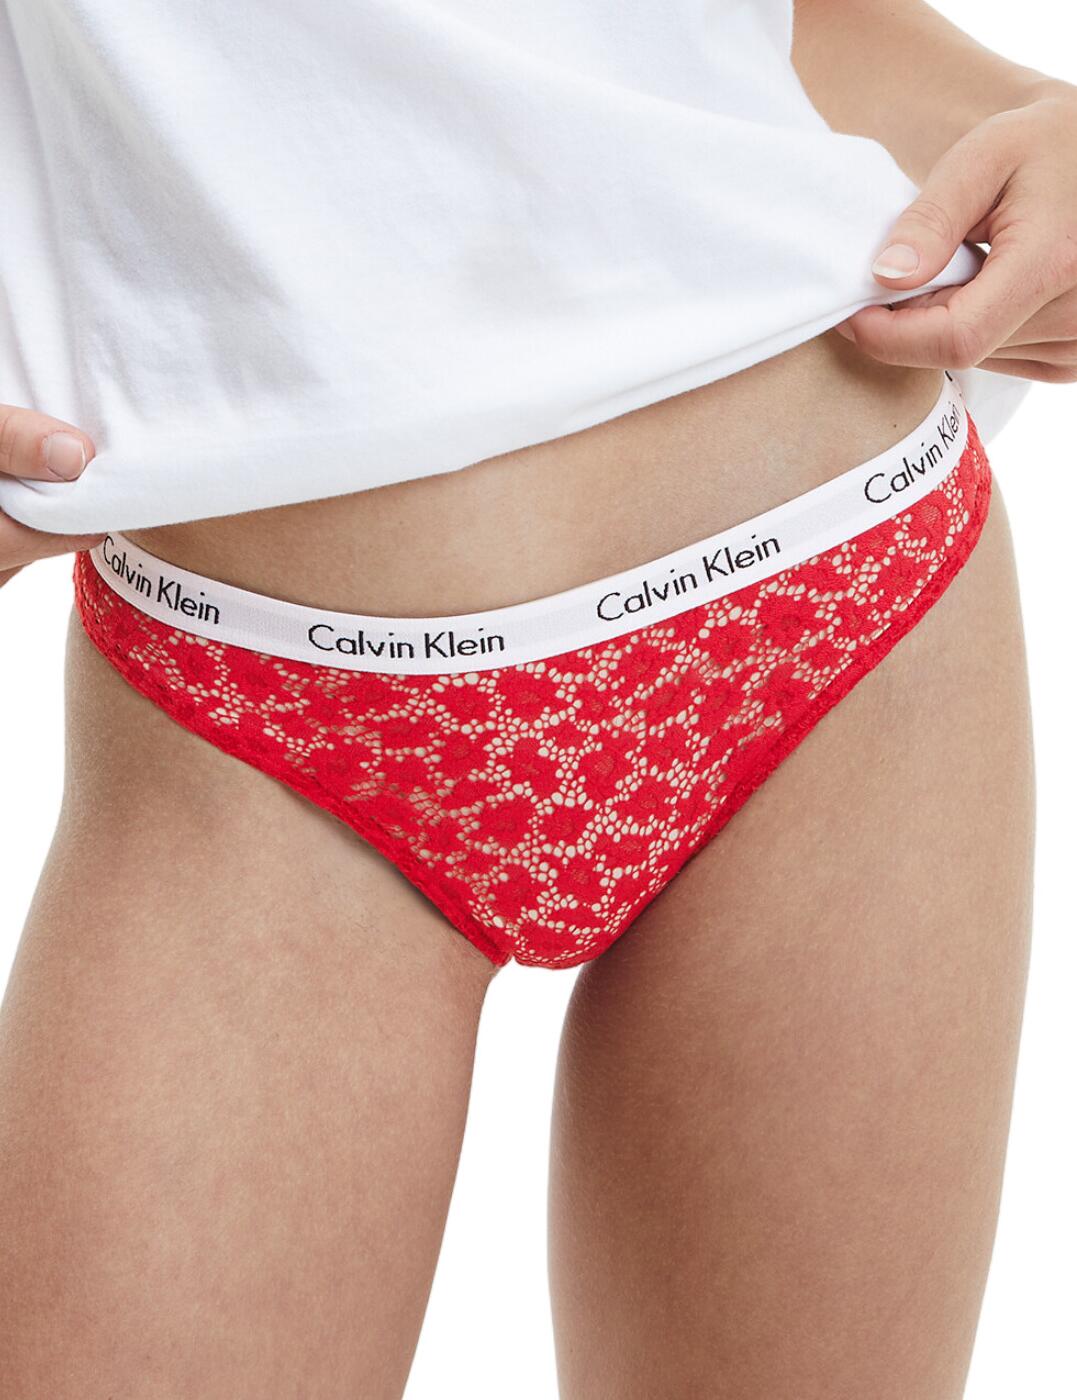 Calvin Klein Carousel Thong Panty Sale 2021